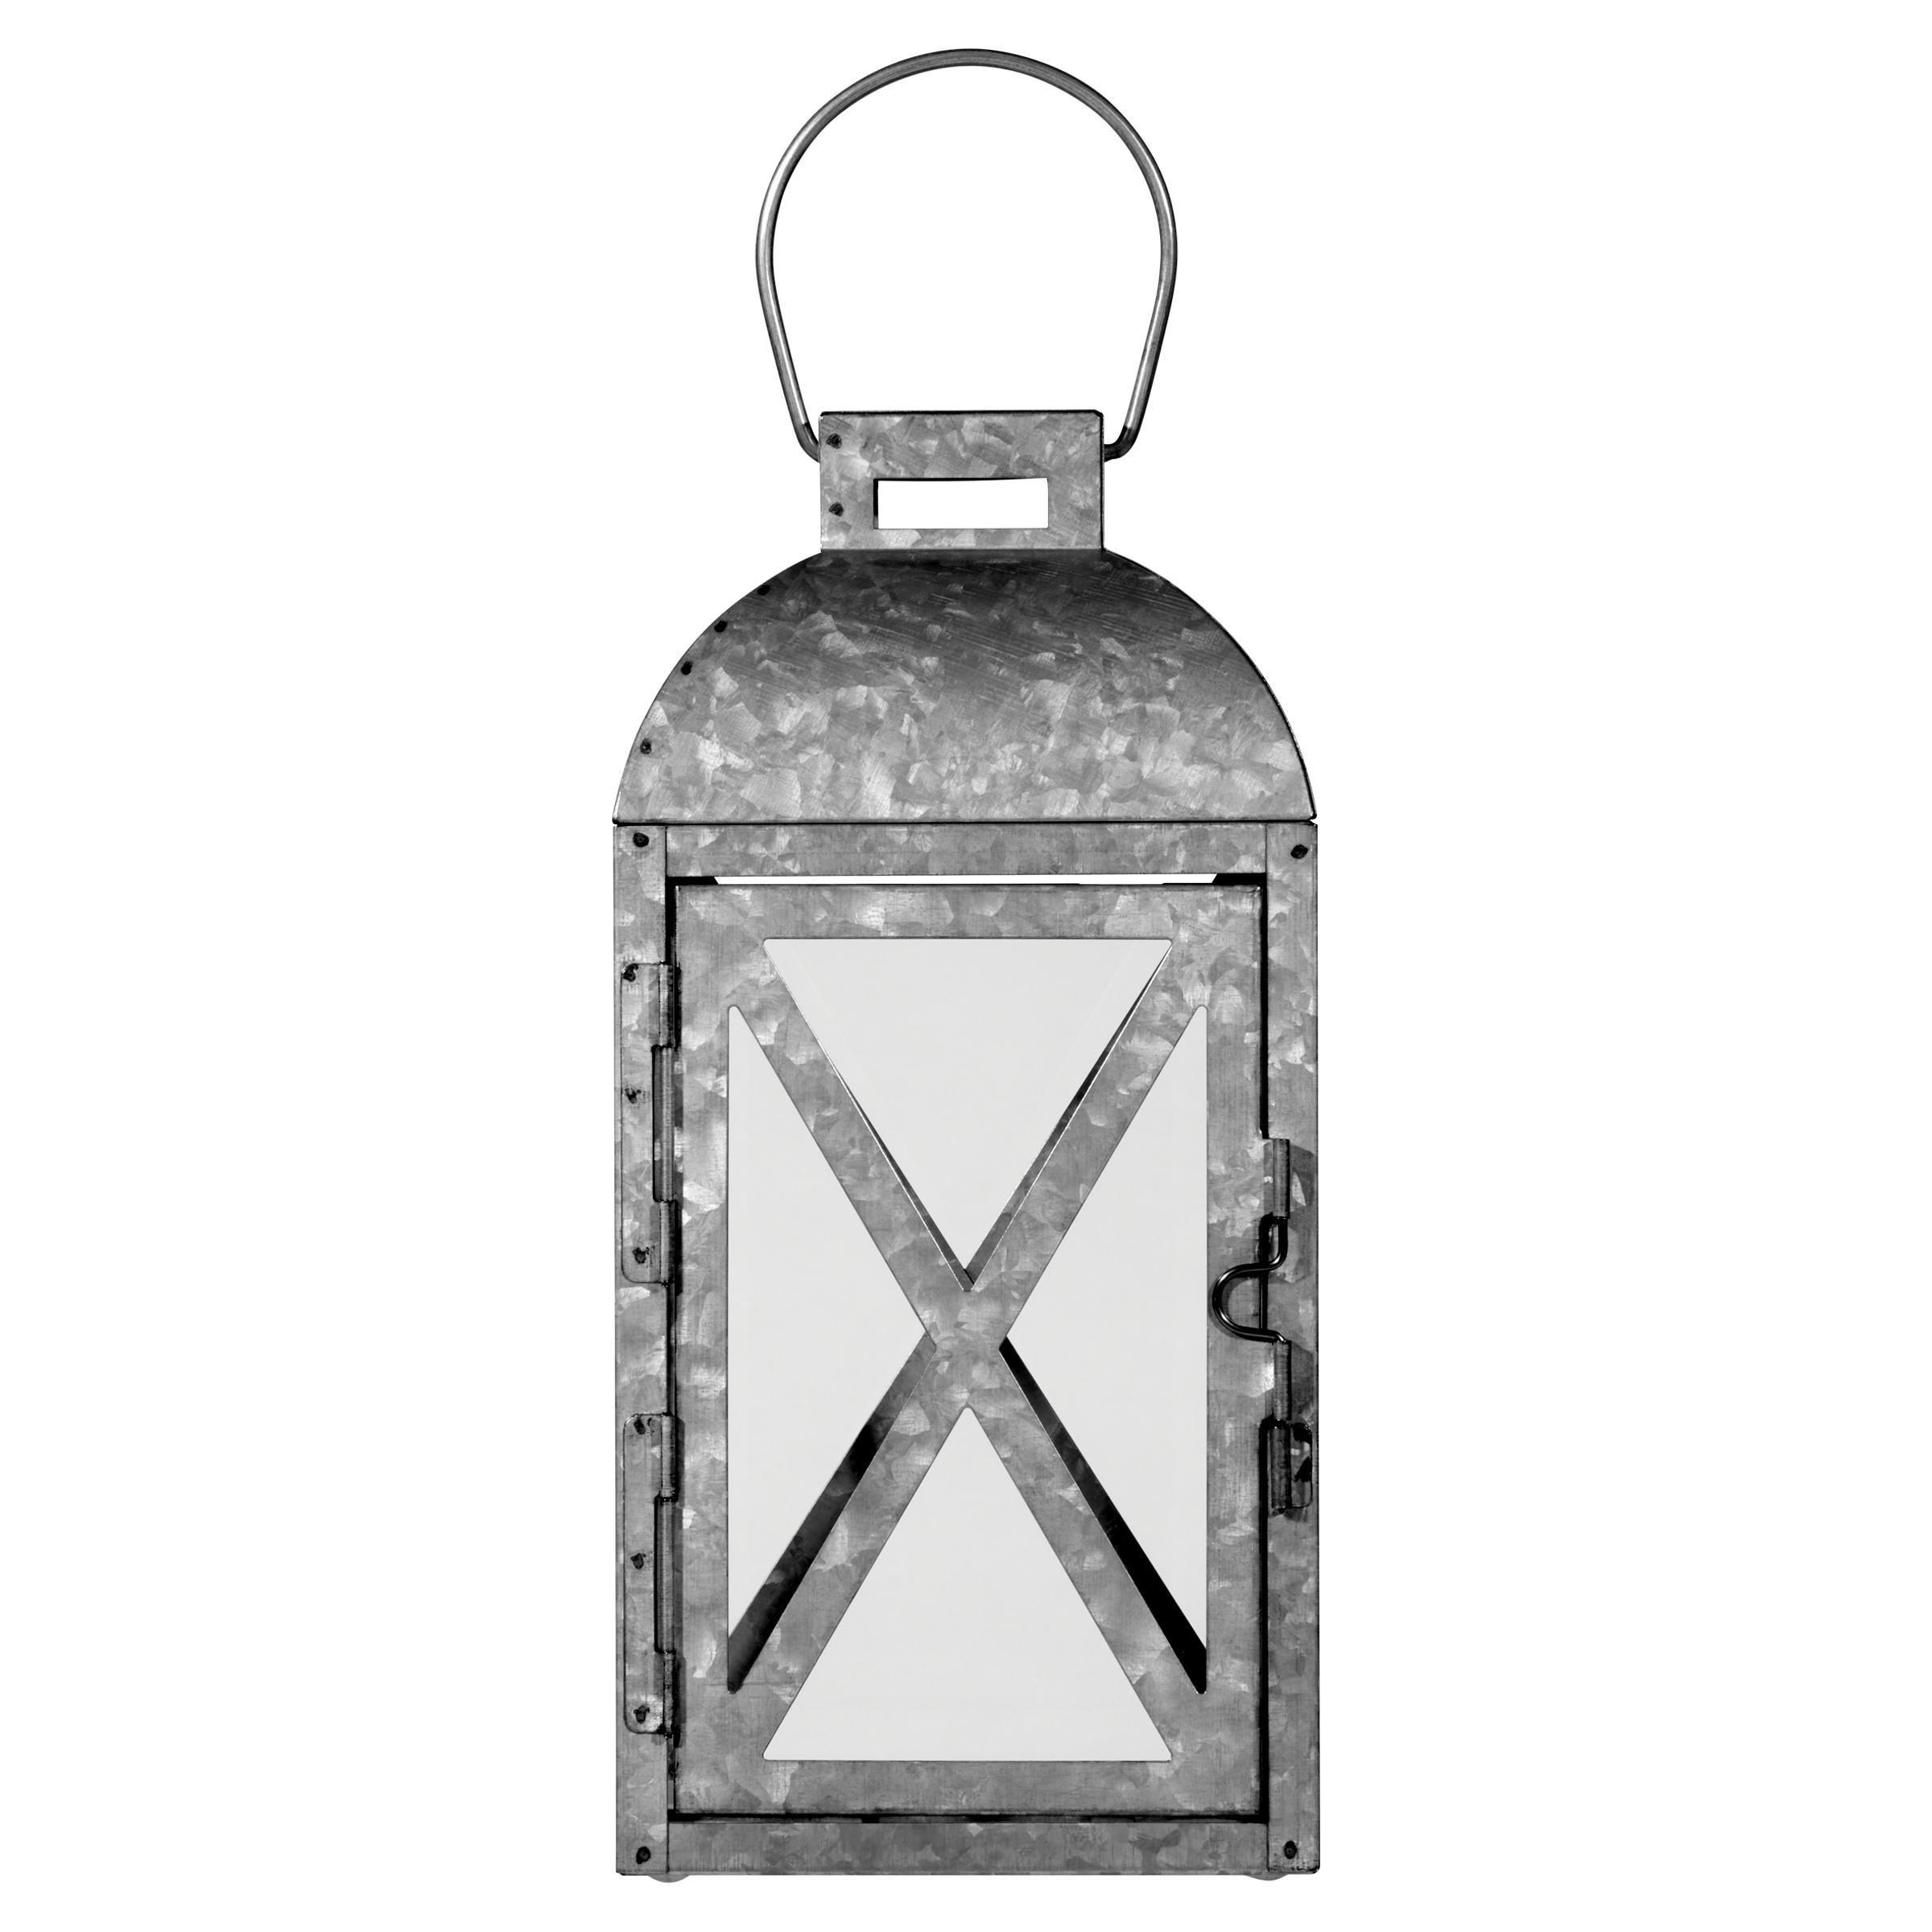 Mainstays Medium Galvanized Metal Candle Holder Lantern, Antique Gray - image 1 of 6